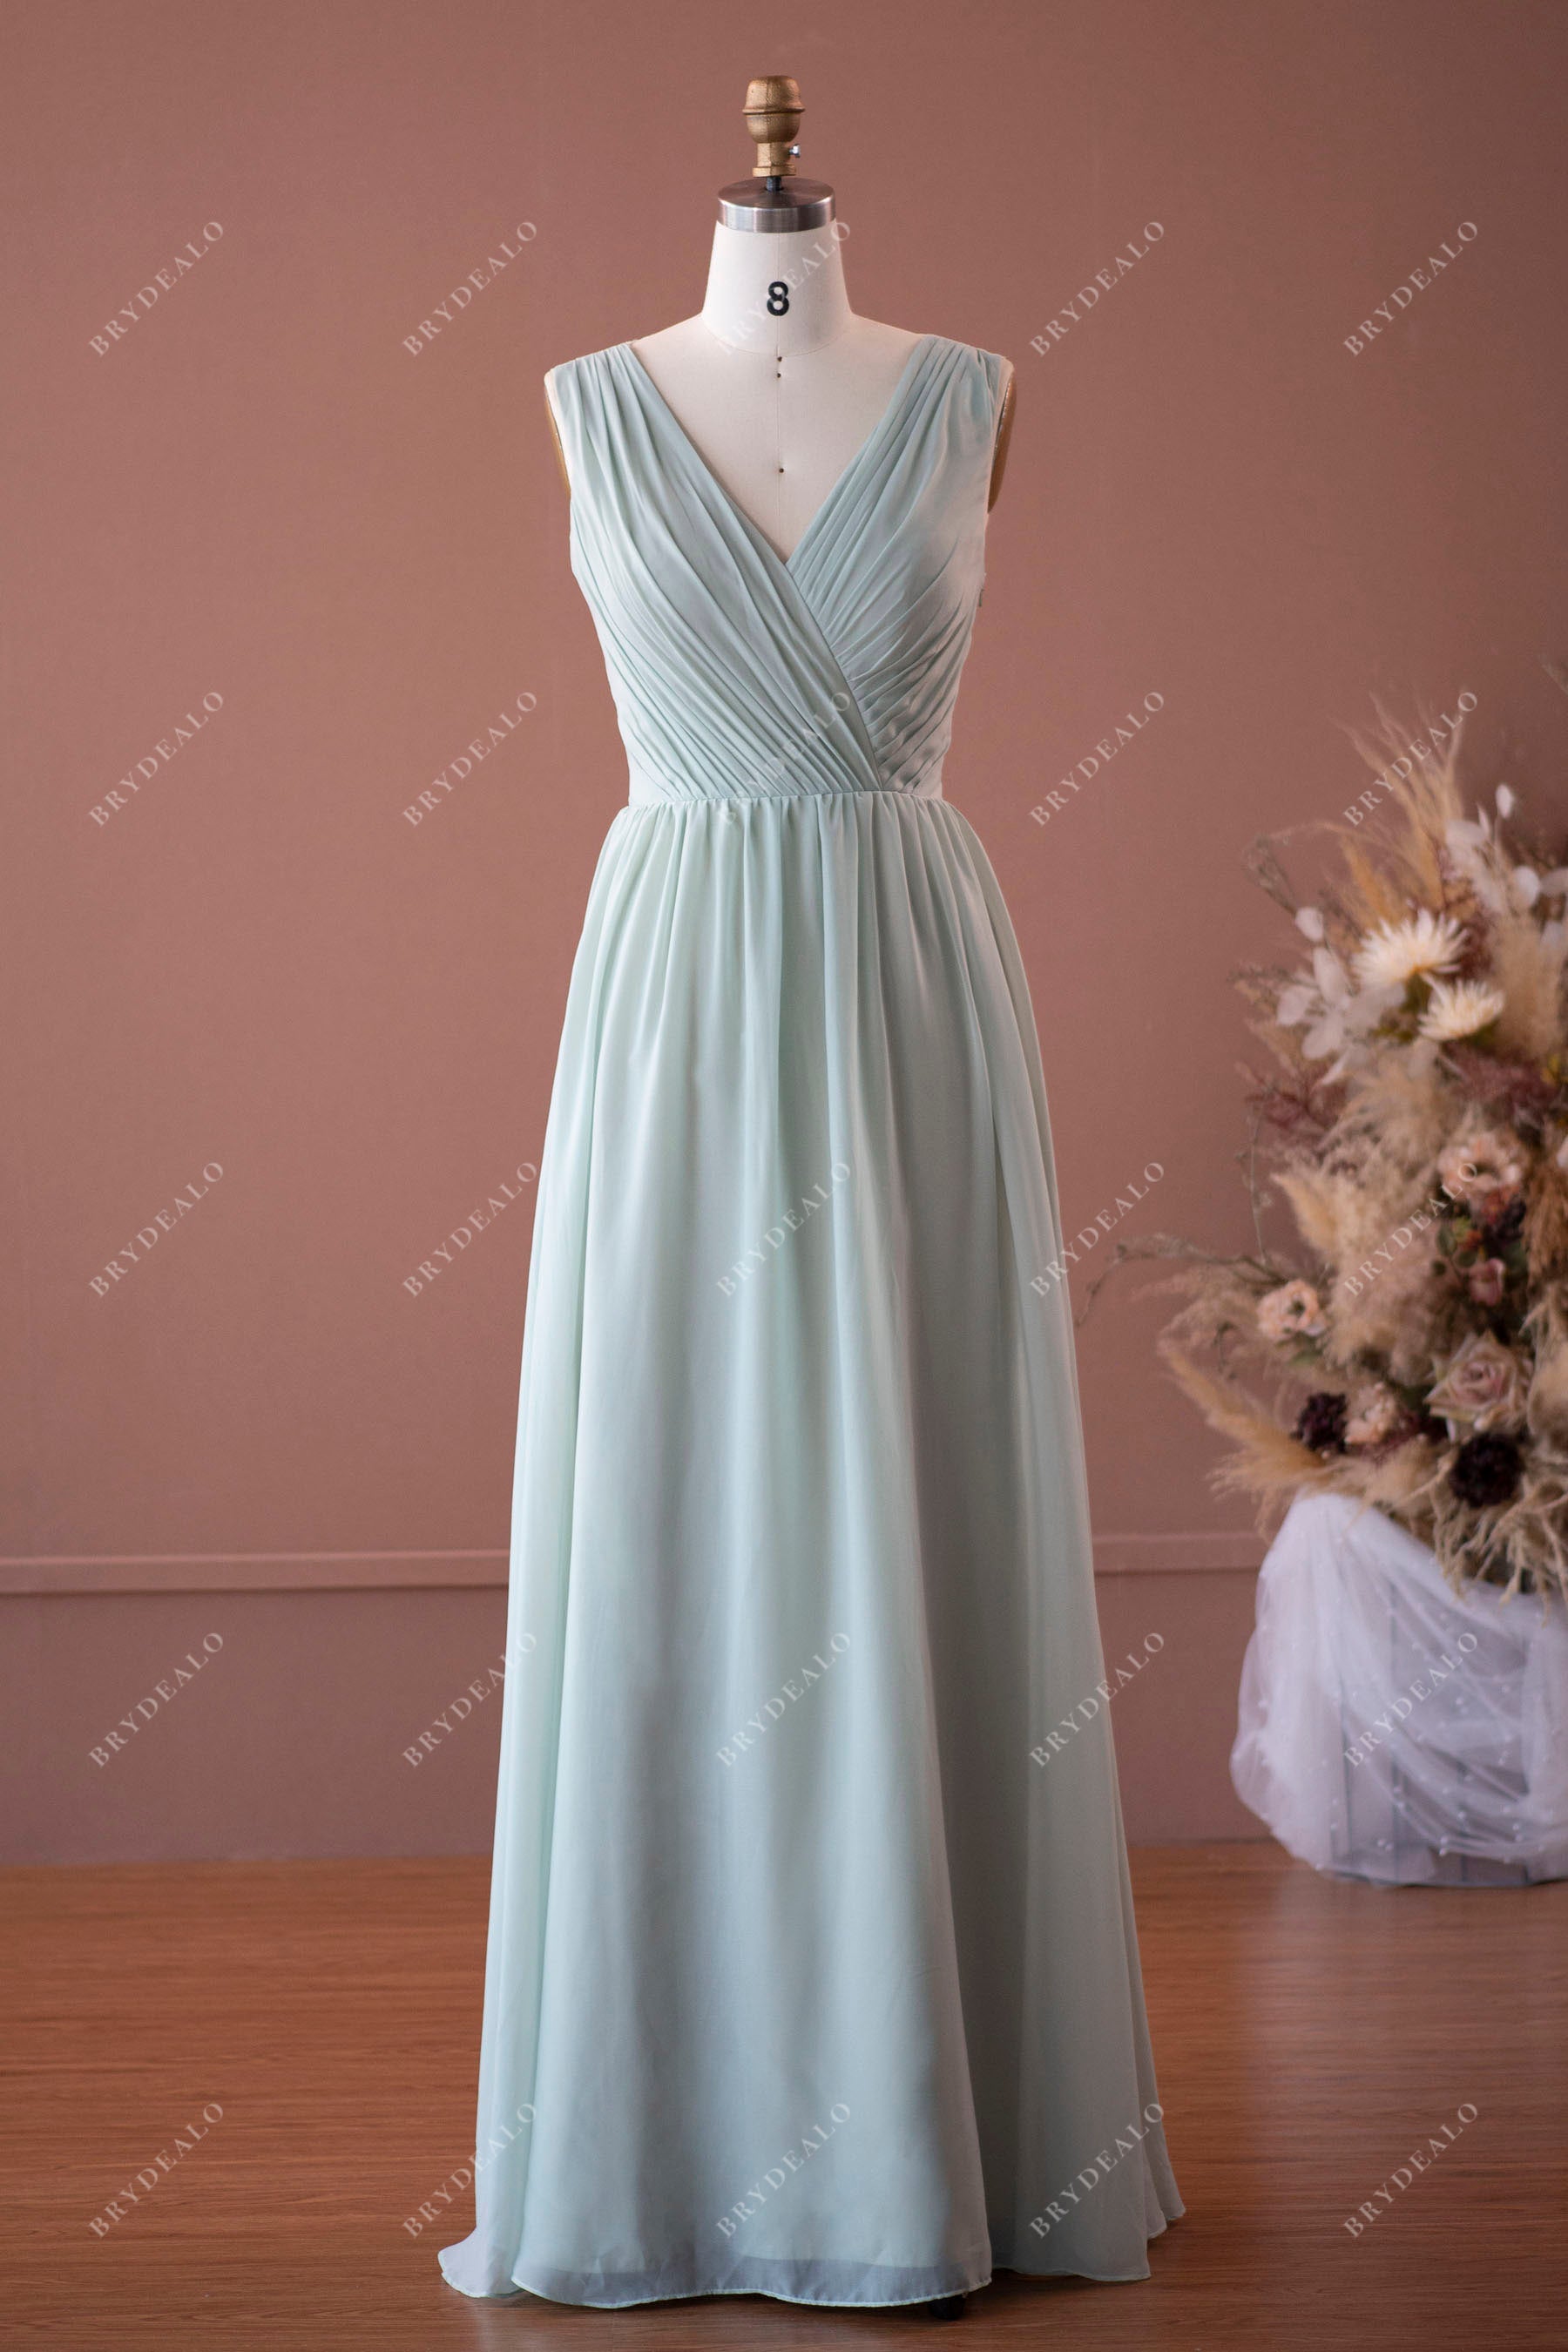 Sage Lace Chiffon Illusion Back Ruched Bridesmaid Dress